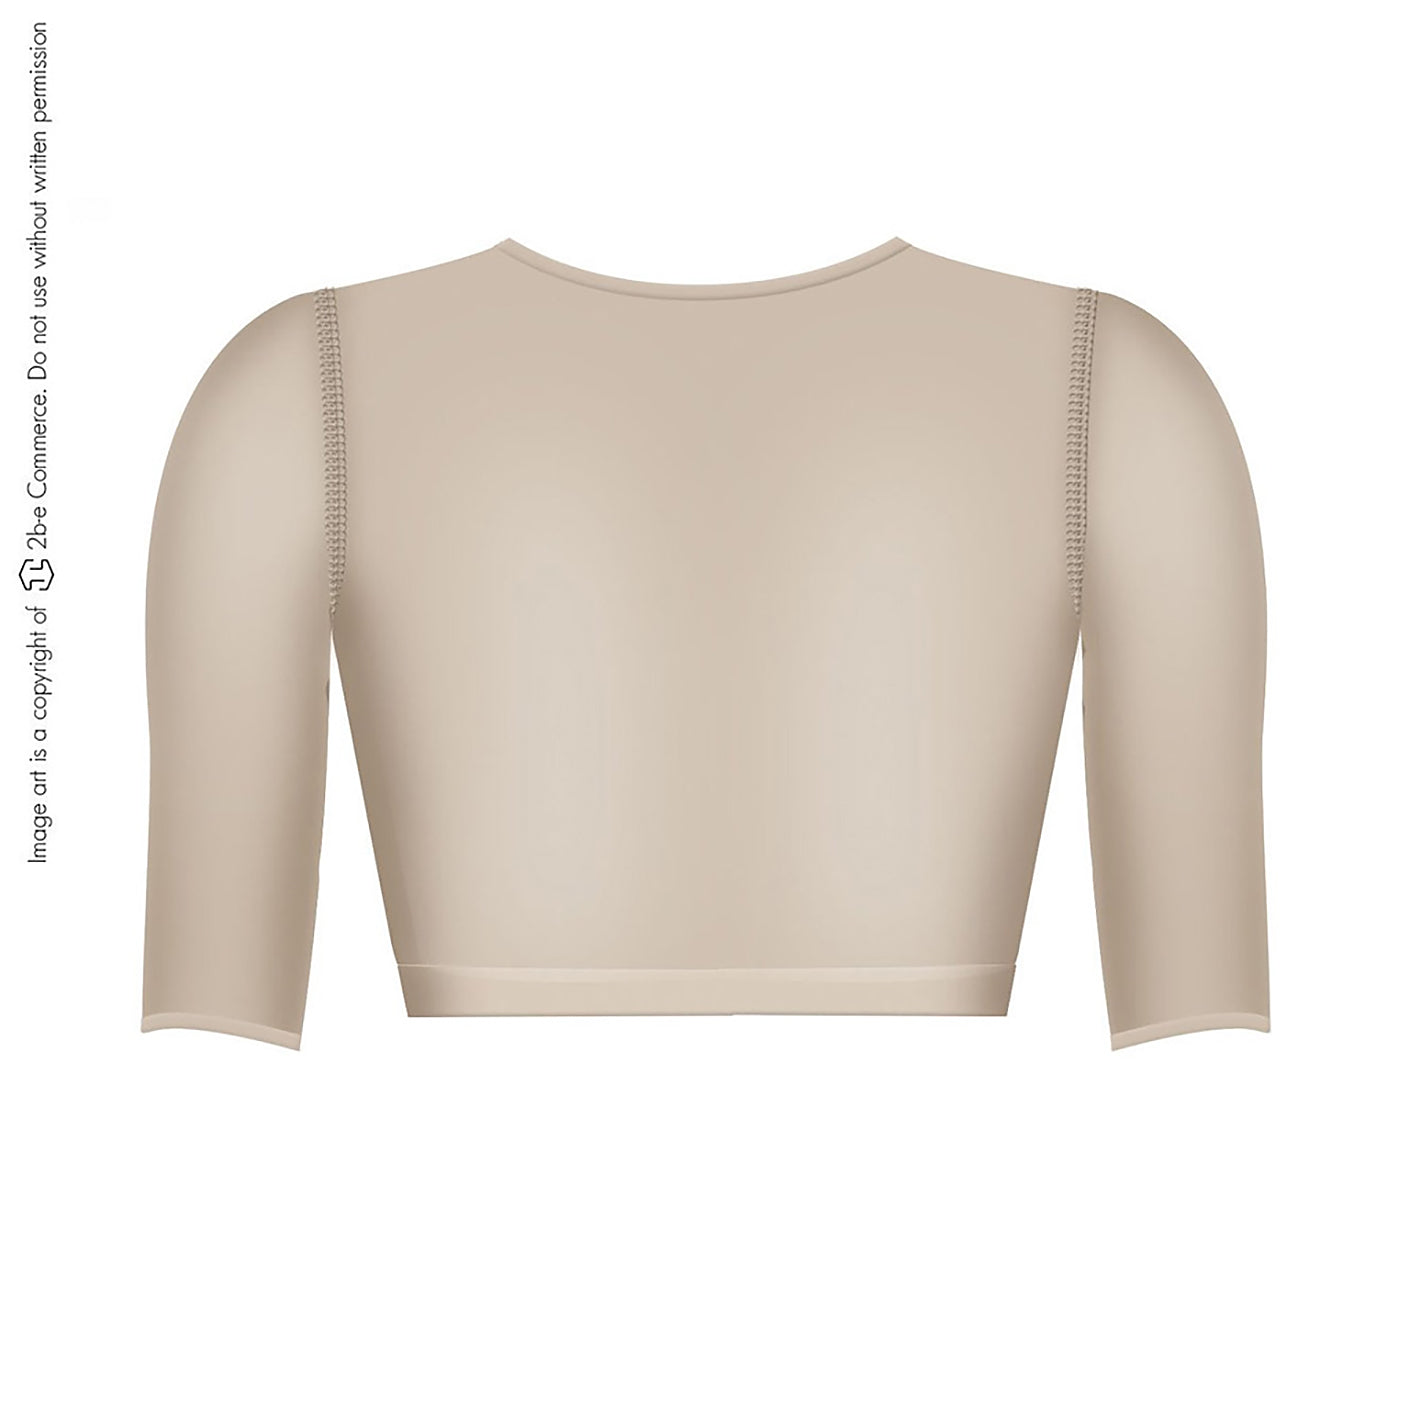 Salome Shapewear: 0314 - Vest